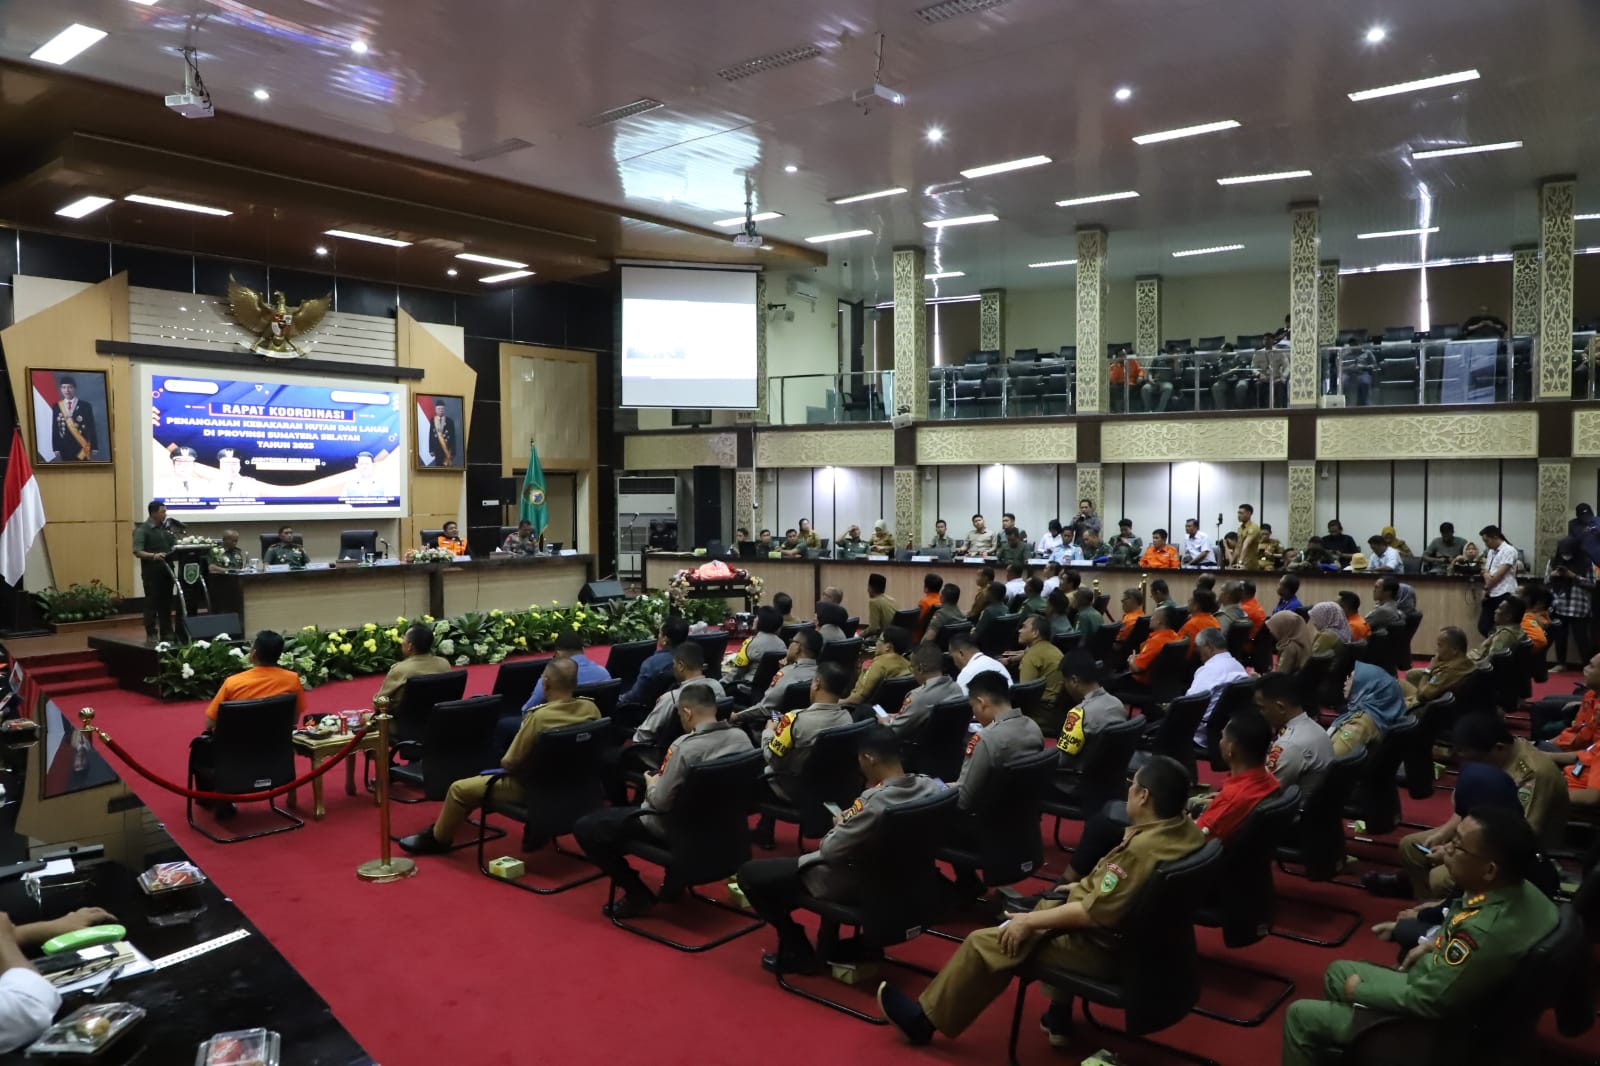 Suasana Rapat Koordinasi Penanganan Kebakaran Hutan dan Lahan di Kantor Gubernur Sumatera Selatan, Palembang, Sumatera Selatan pada Selasa (12/9).